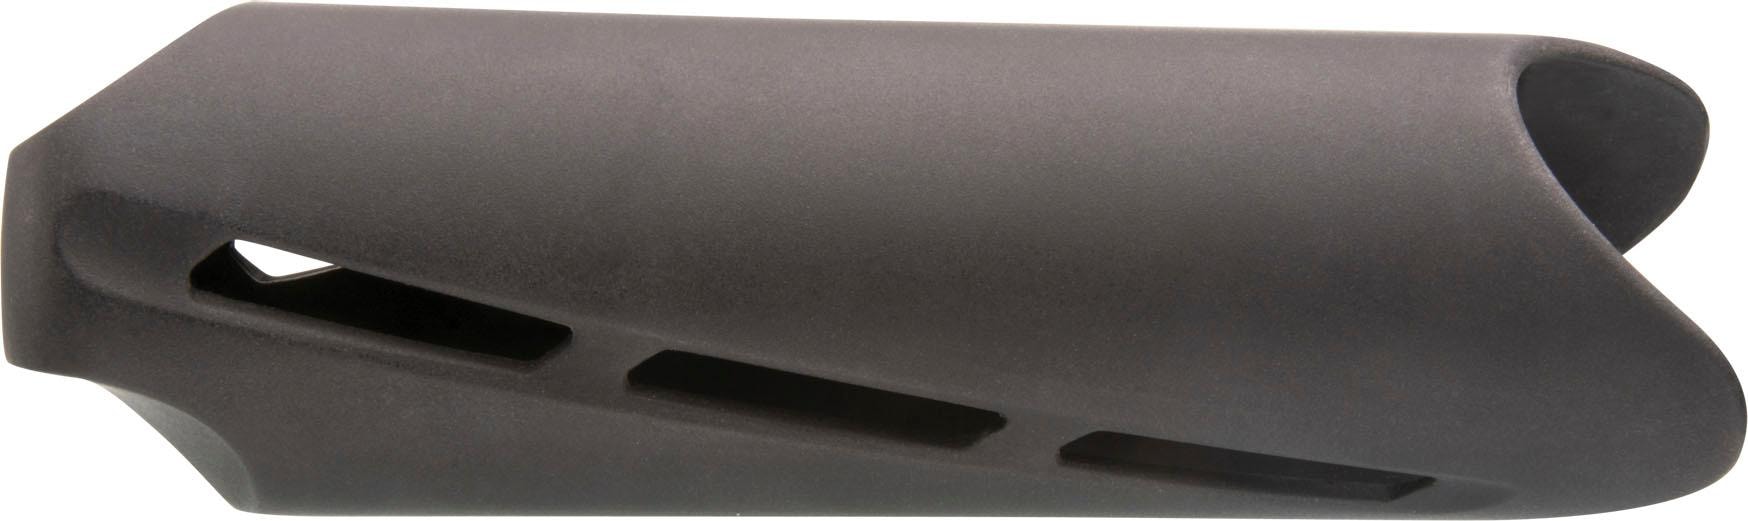 Remington Glätteisen Garantie Curl »S6606 & mit Straight 3 Jahren Haarglätter«, XXL Confidence Keramik-Turmalin-Beschichtung